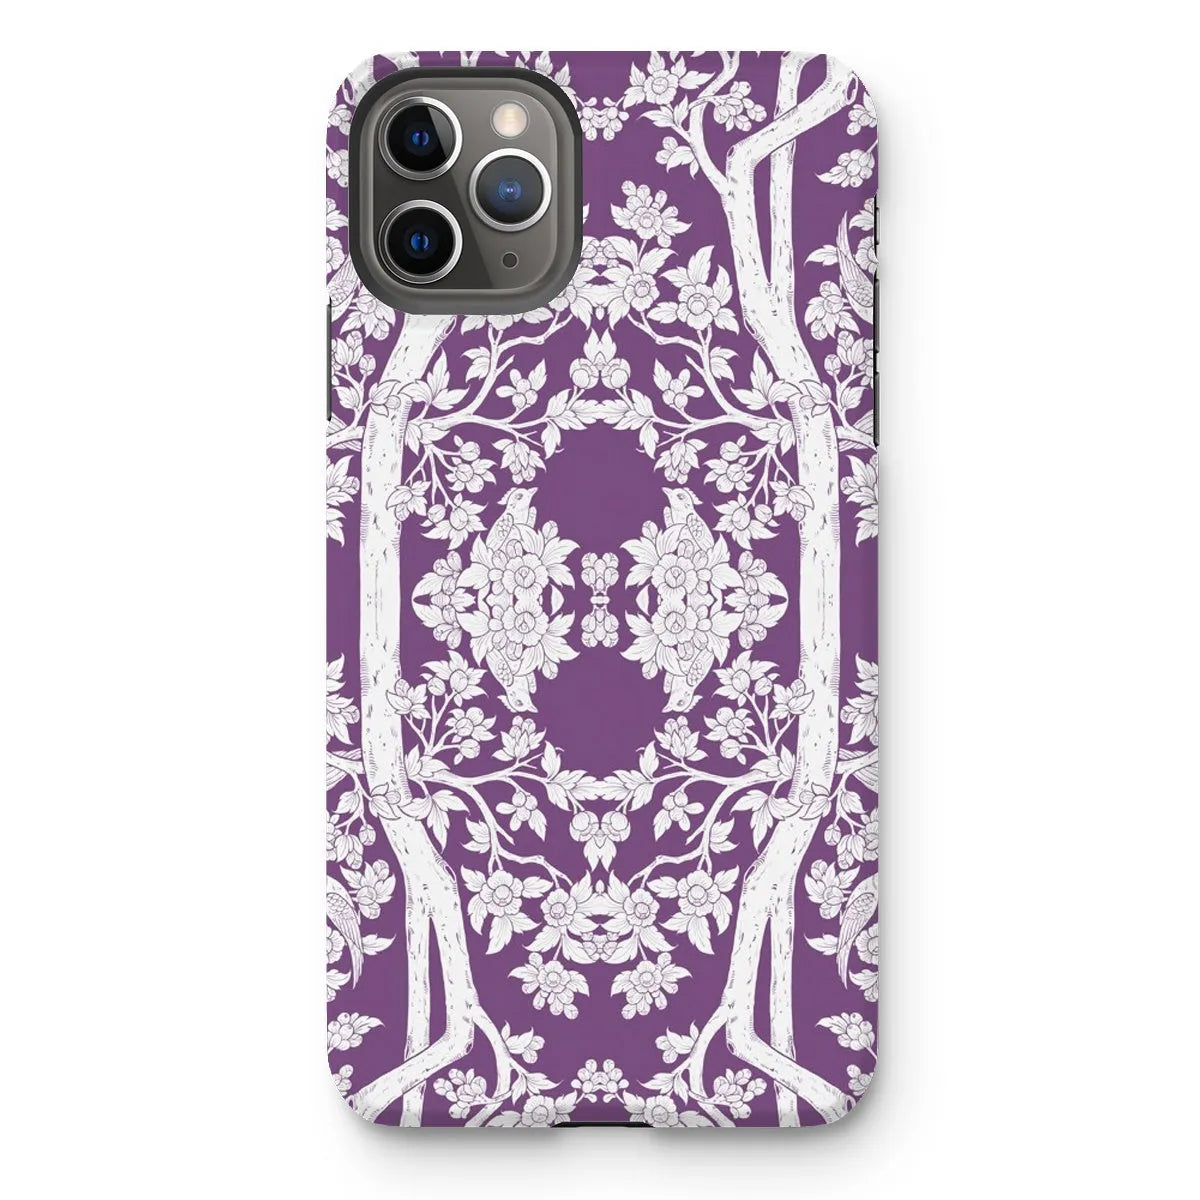 Aviary Purple Aesthetic Pattern Art Phone Case - Iphone 11 Pro Max / Matte - Mobile Phone Cases - Aesthetic Art